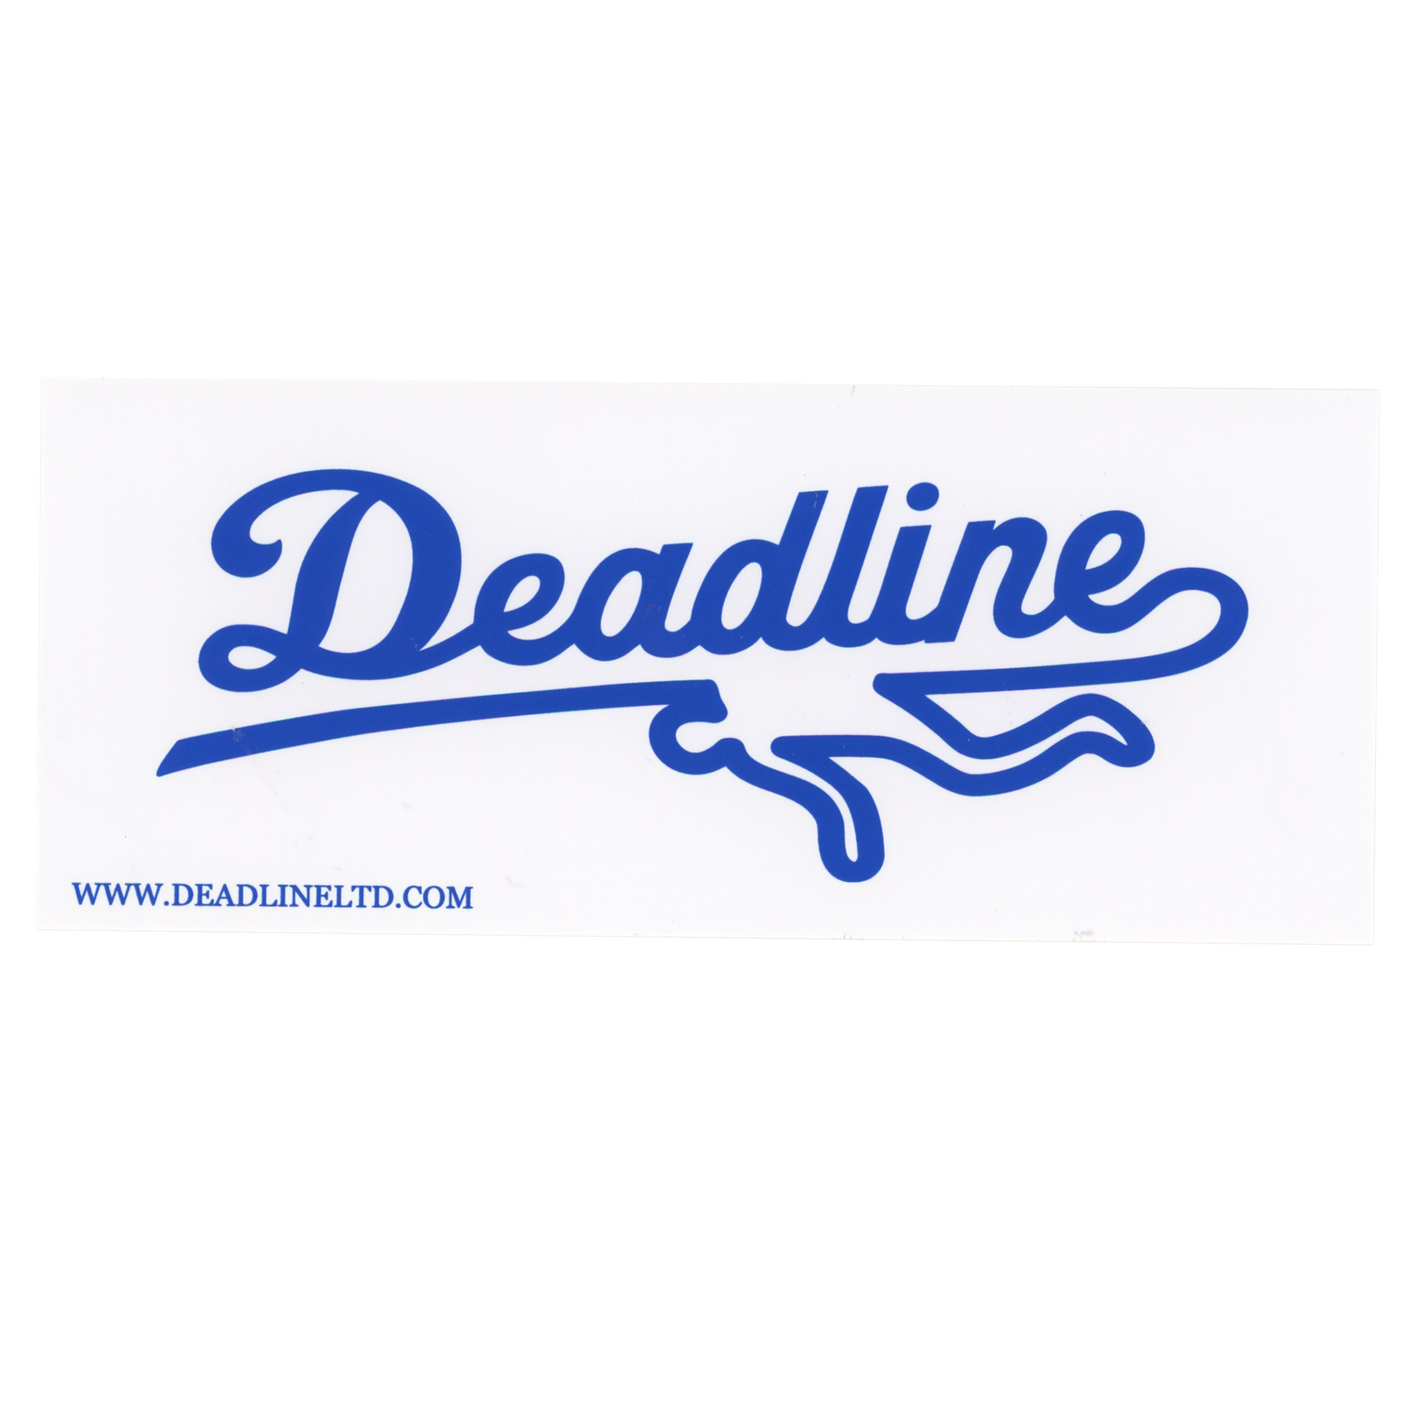 Deadline Blue Font Logo Sticker